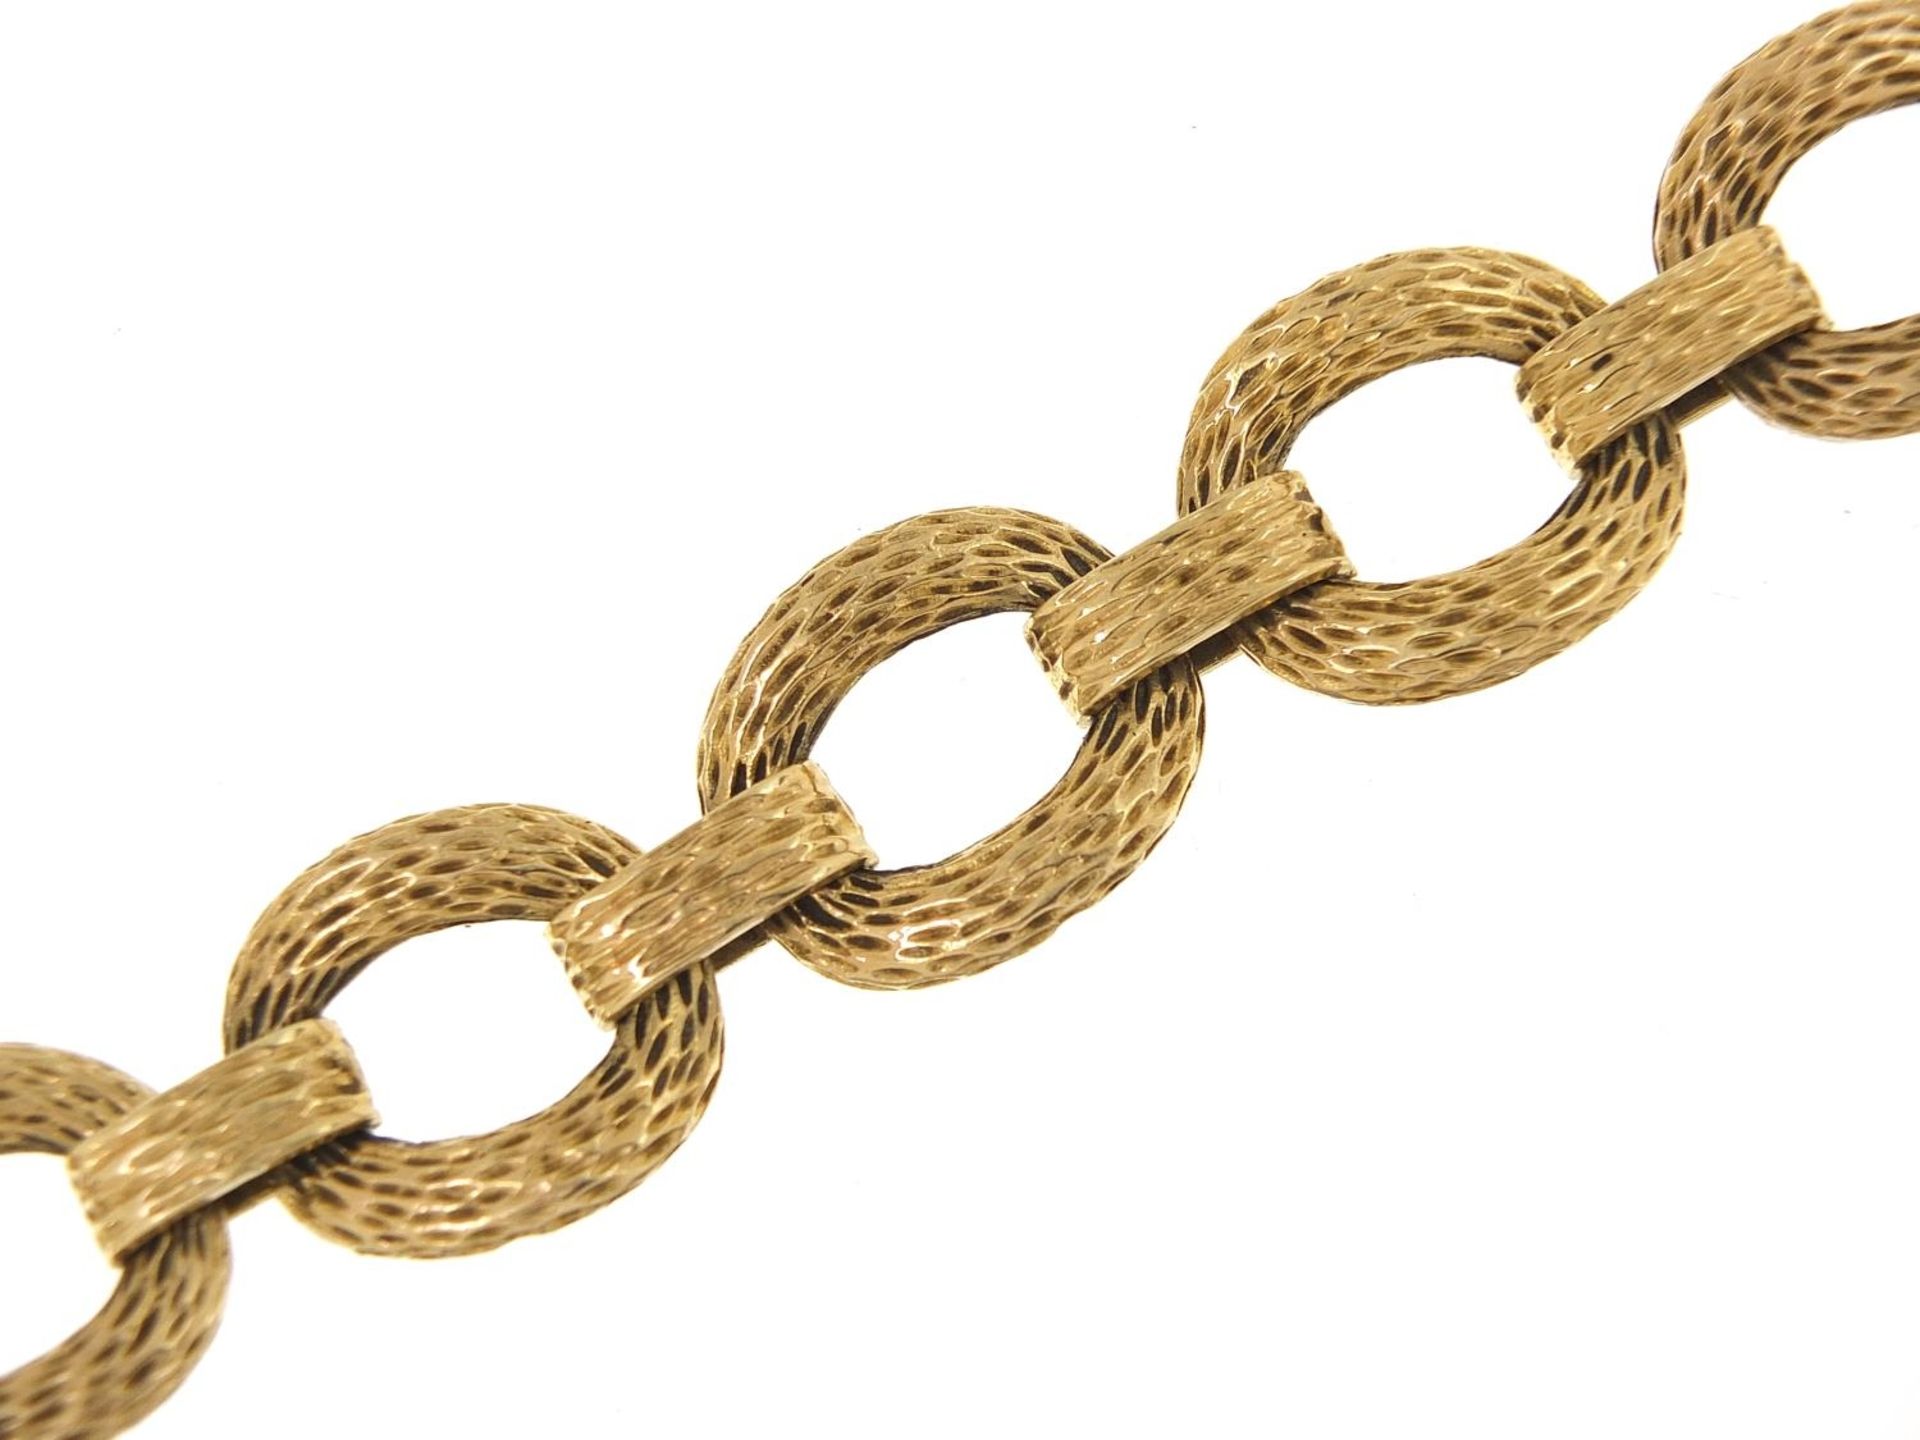 1970s 9ct gold bark design bracelet with oval links, HB makers mark, 18cm in length, 43.8g